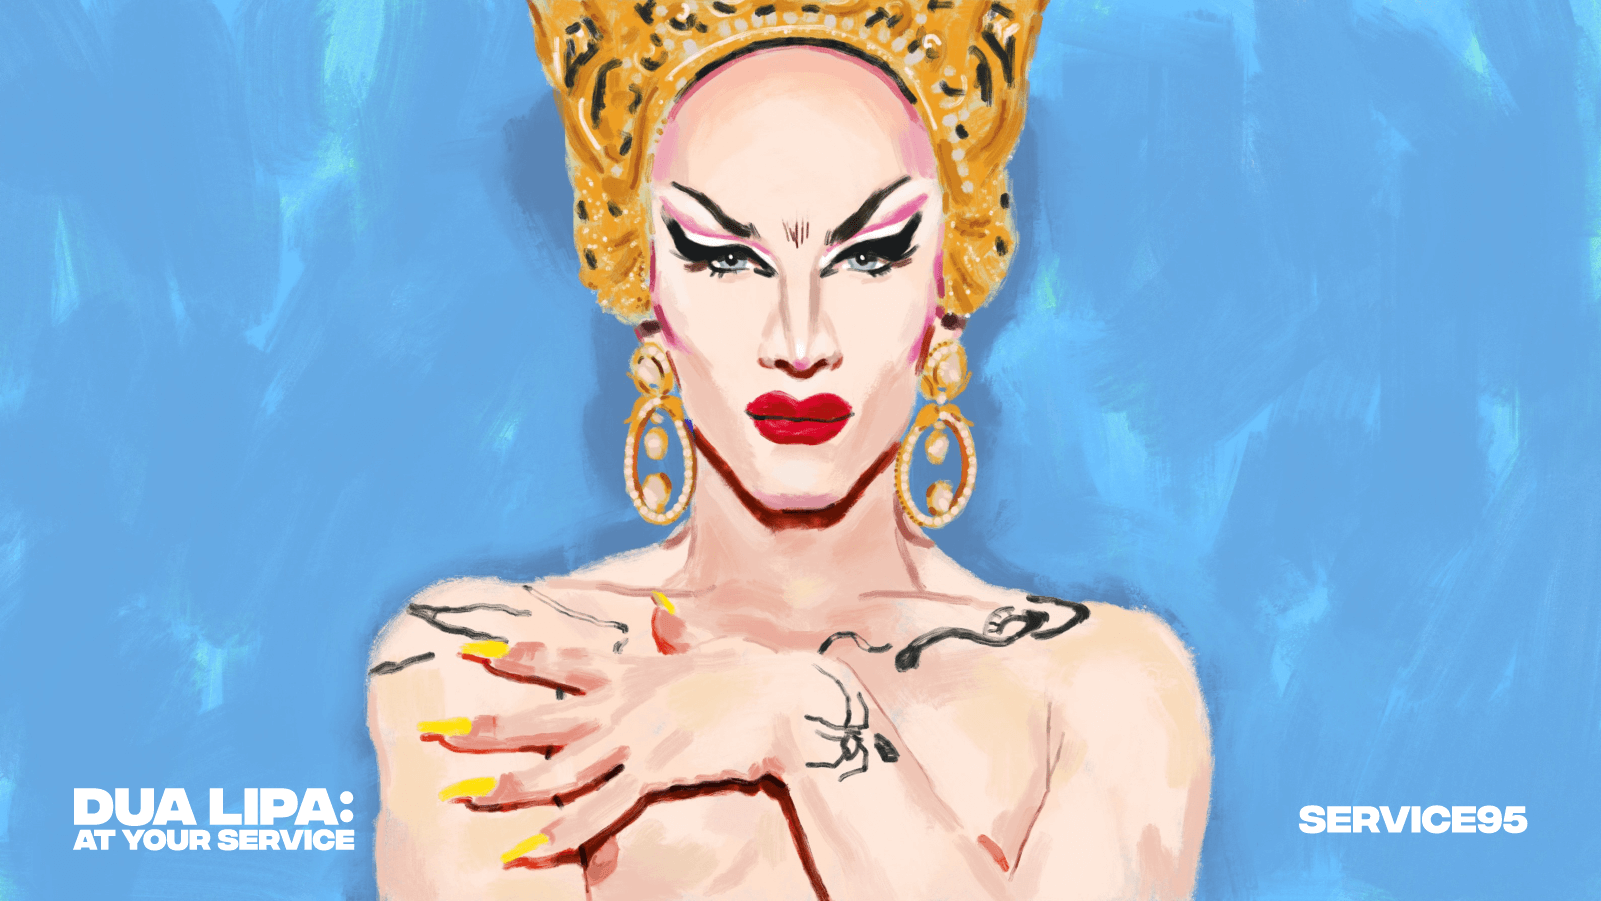 Sasha Velour drag artist illustrated portrait